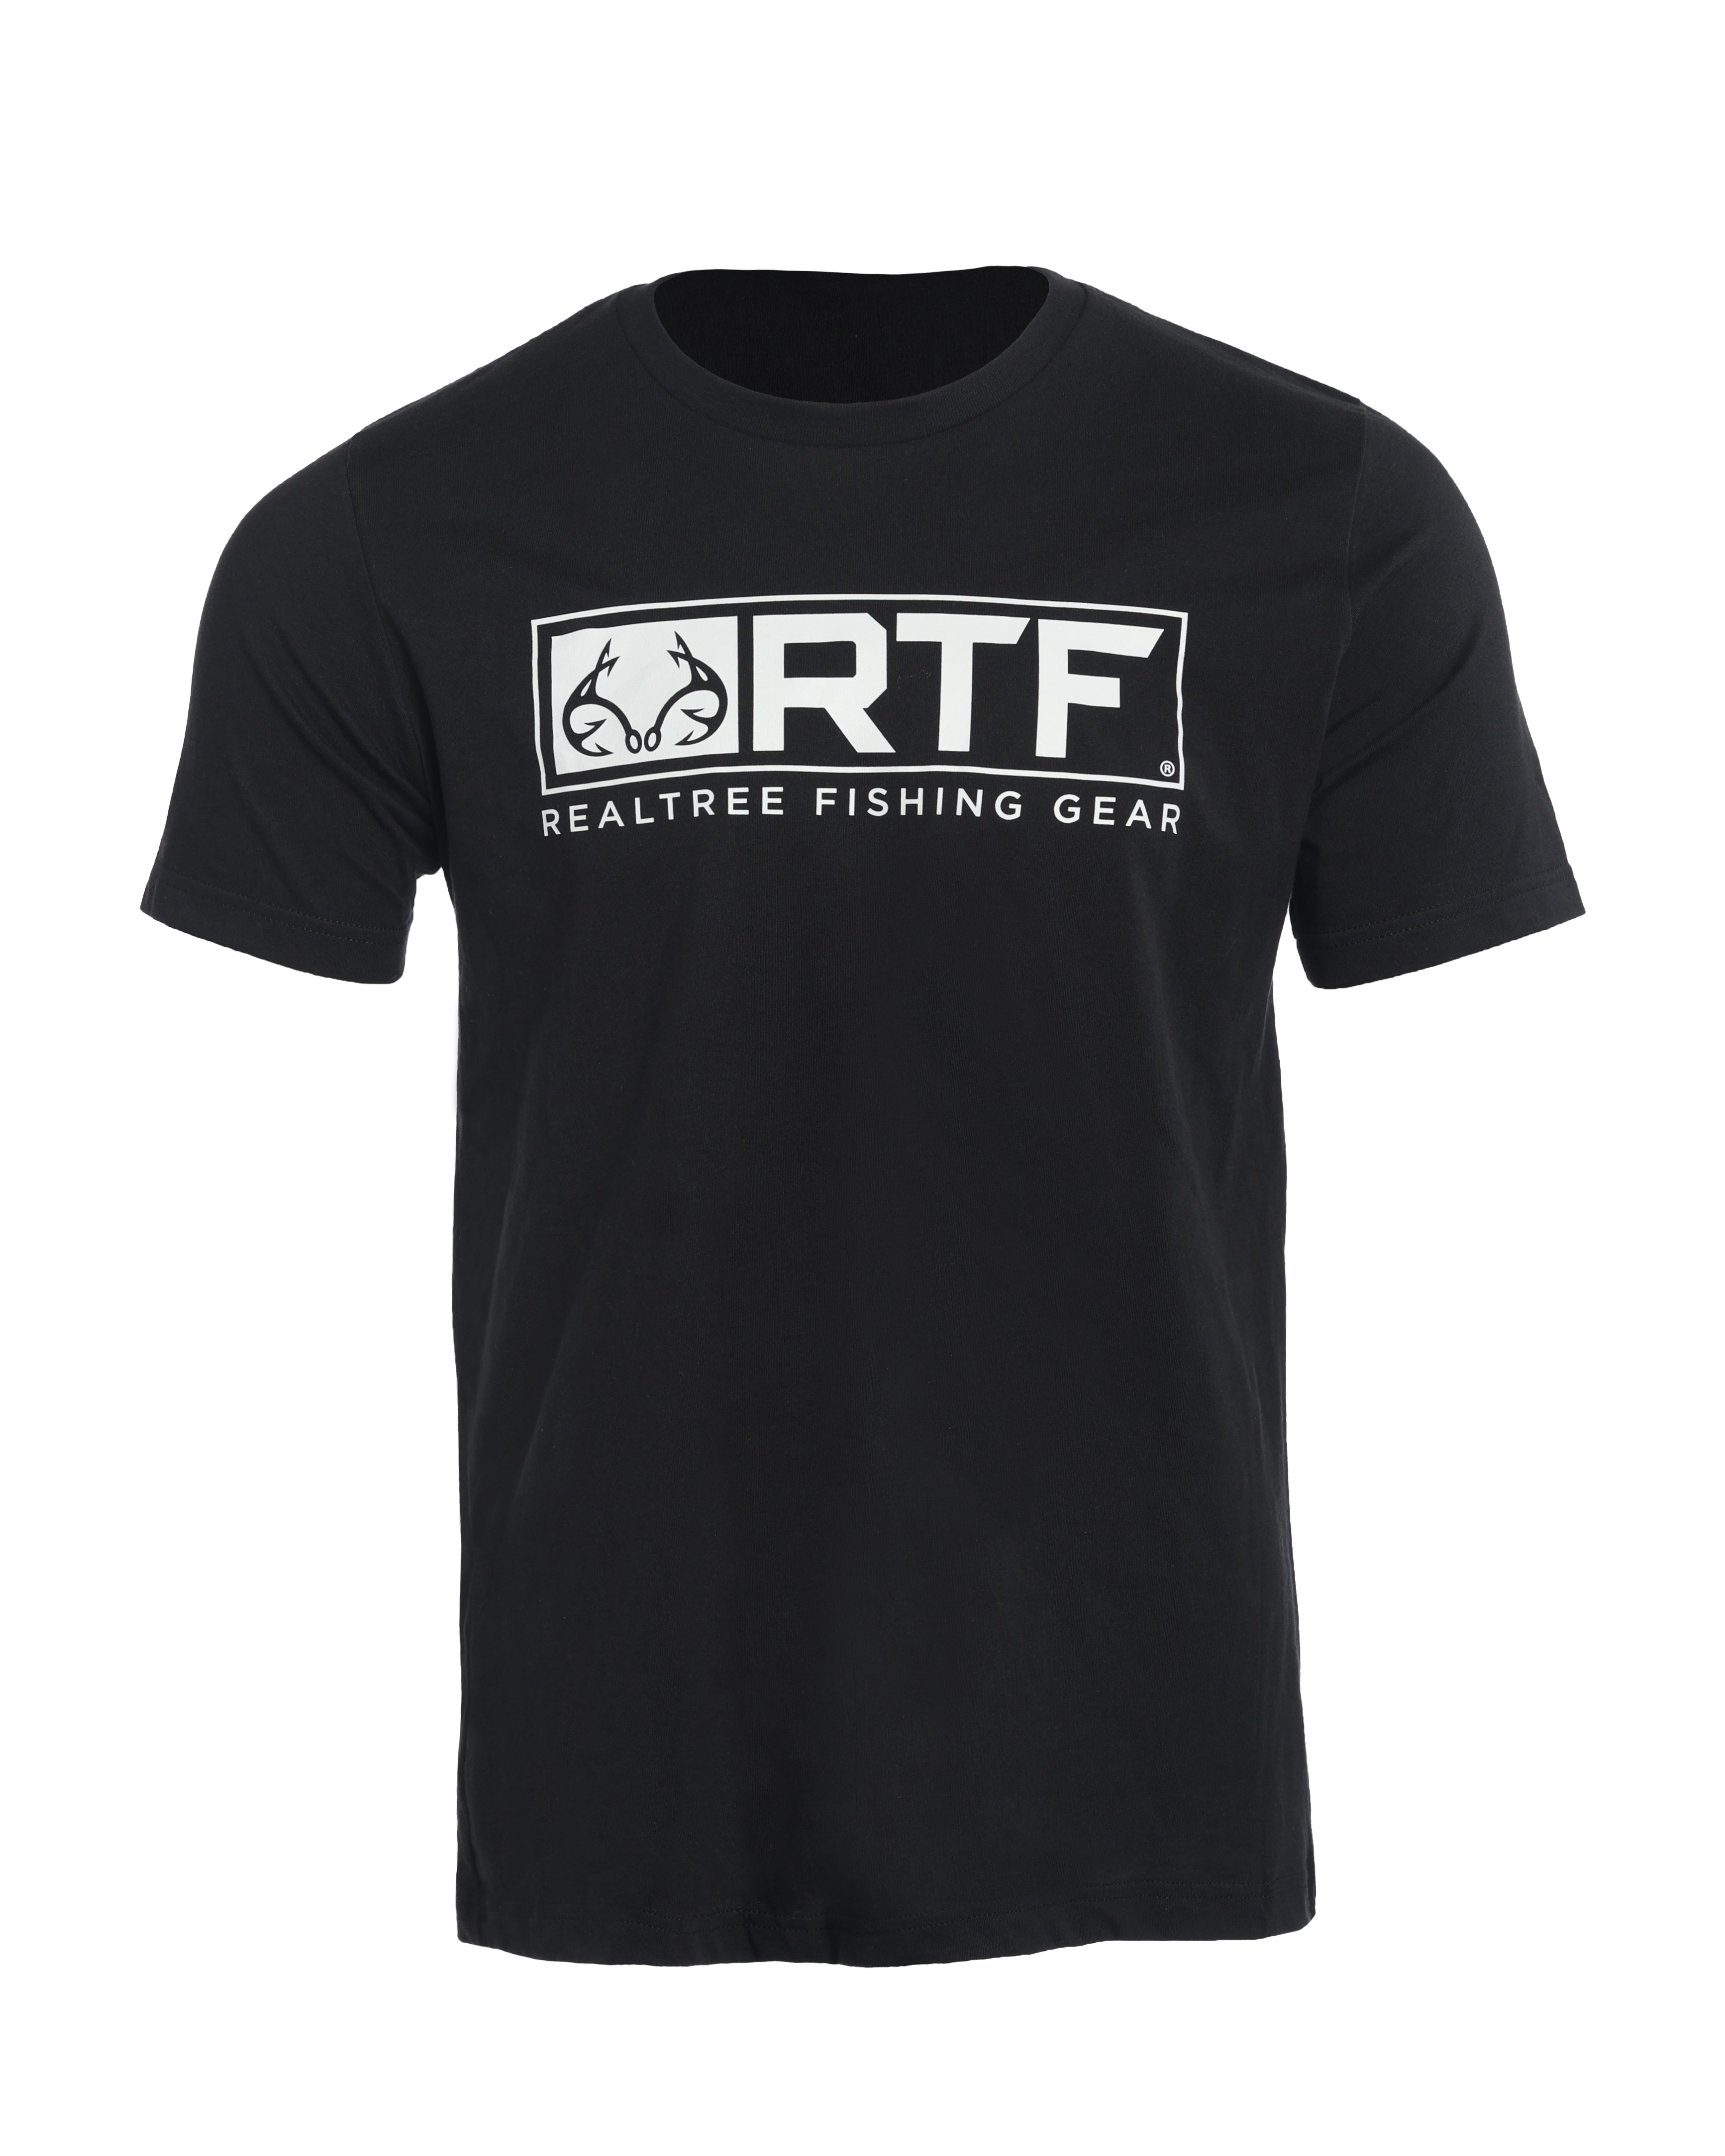 Realtree Fishing Men's Black Shirt